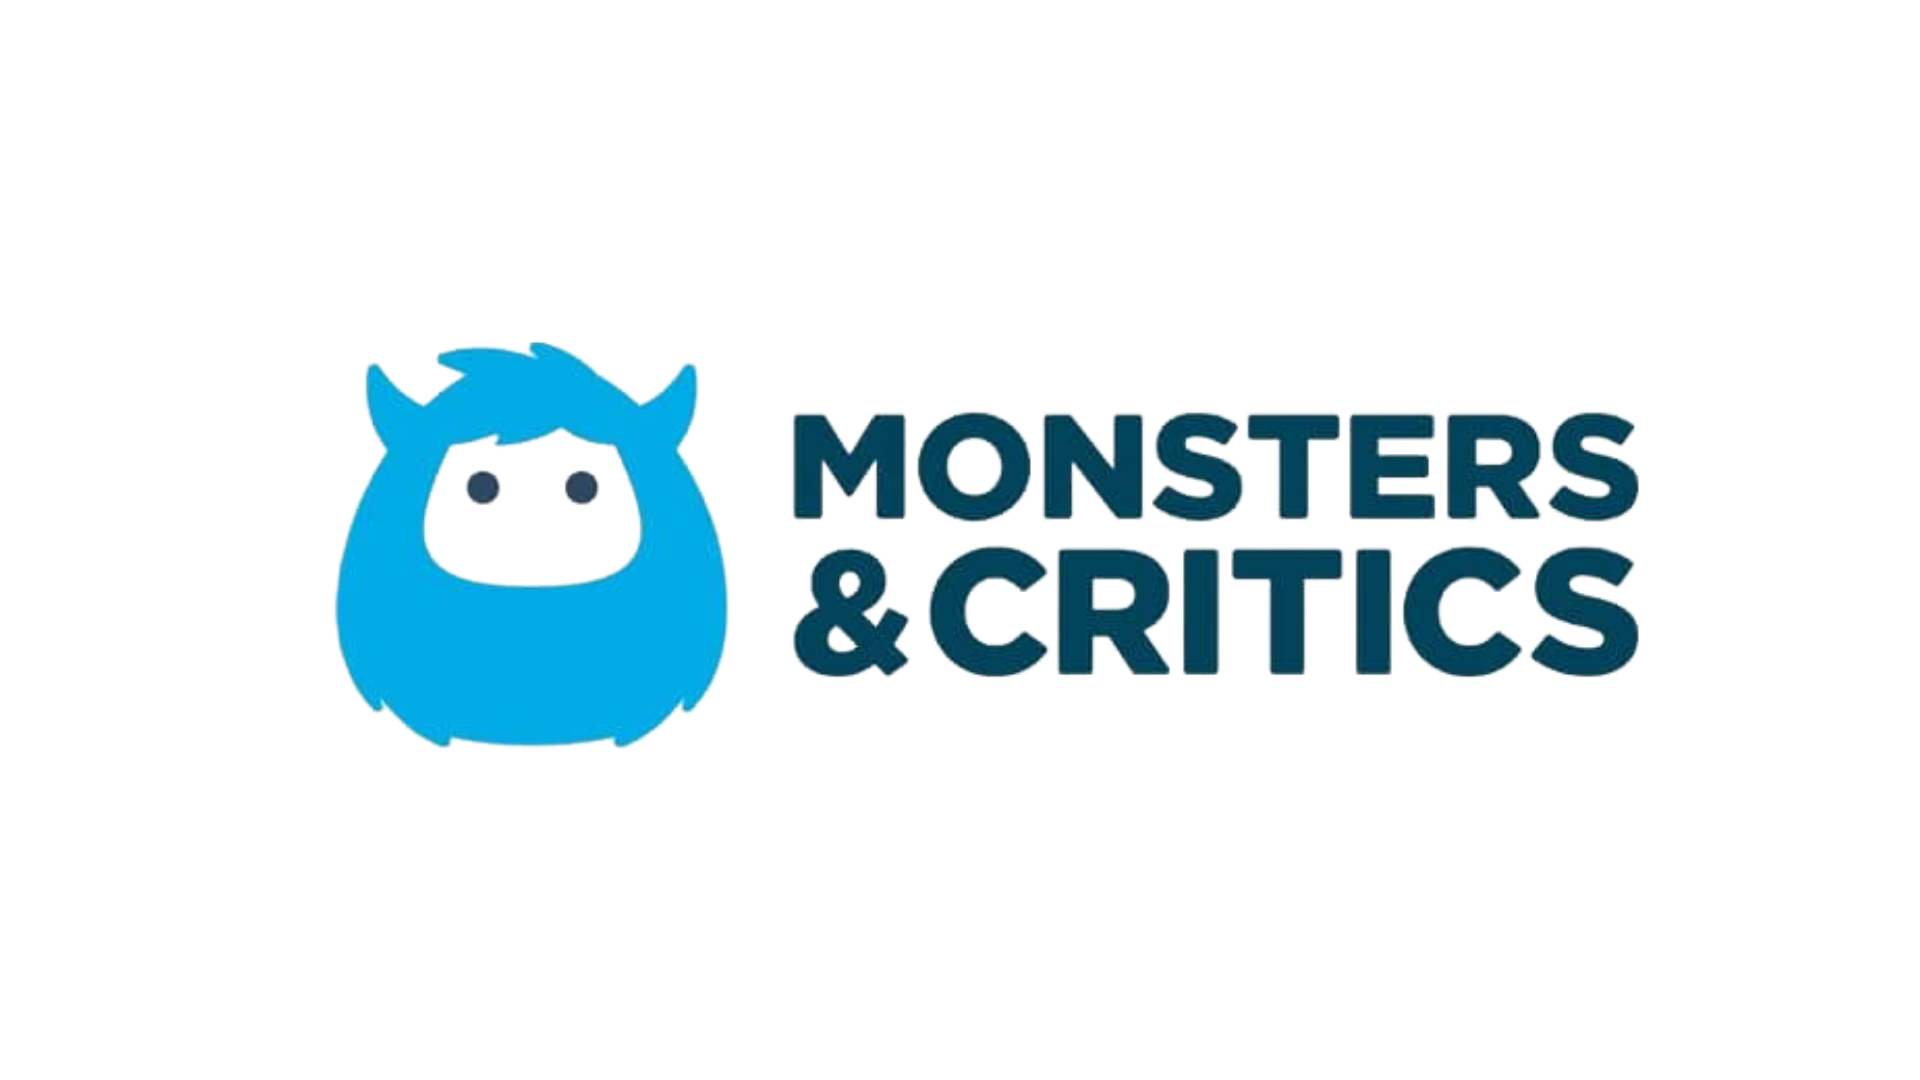 Monsters & Critics logo